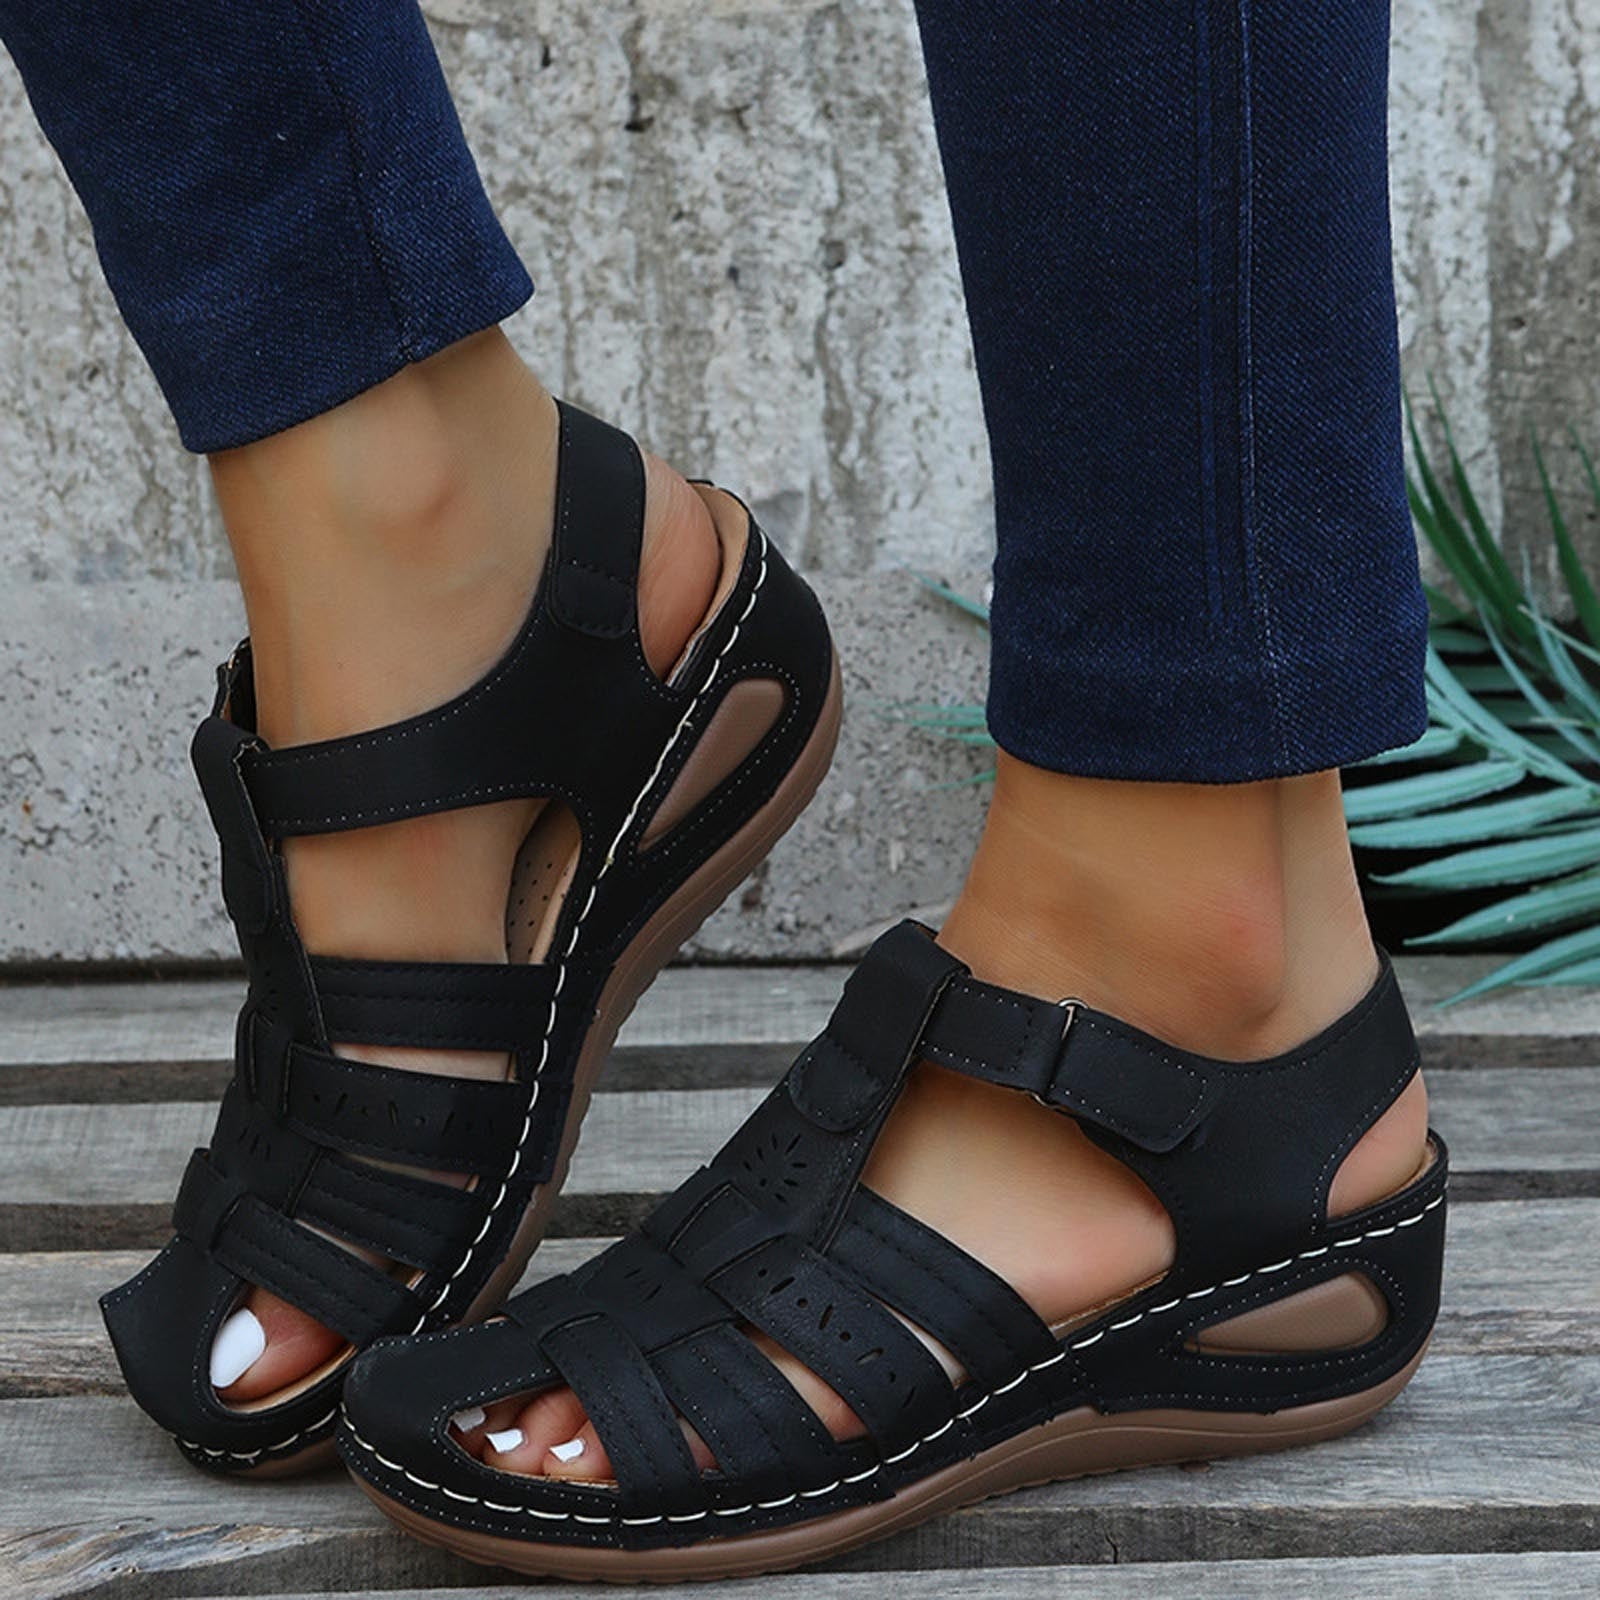 CHGBMOK Clearance Womens Sandals Summer Ladies Shoes Wedge Heel